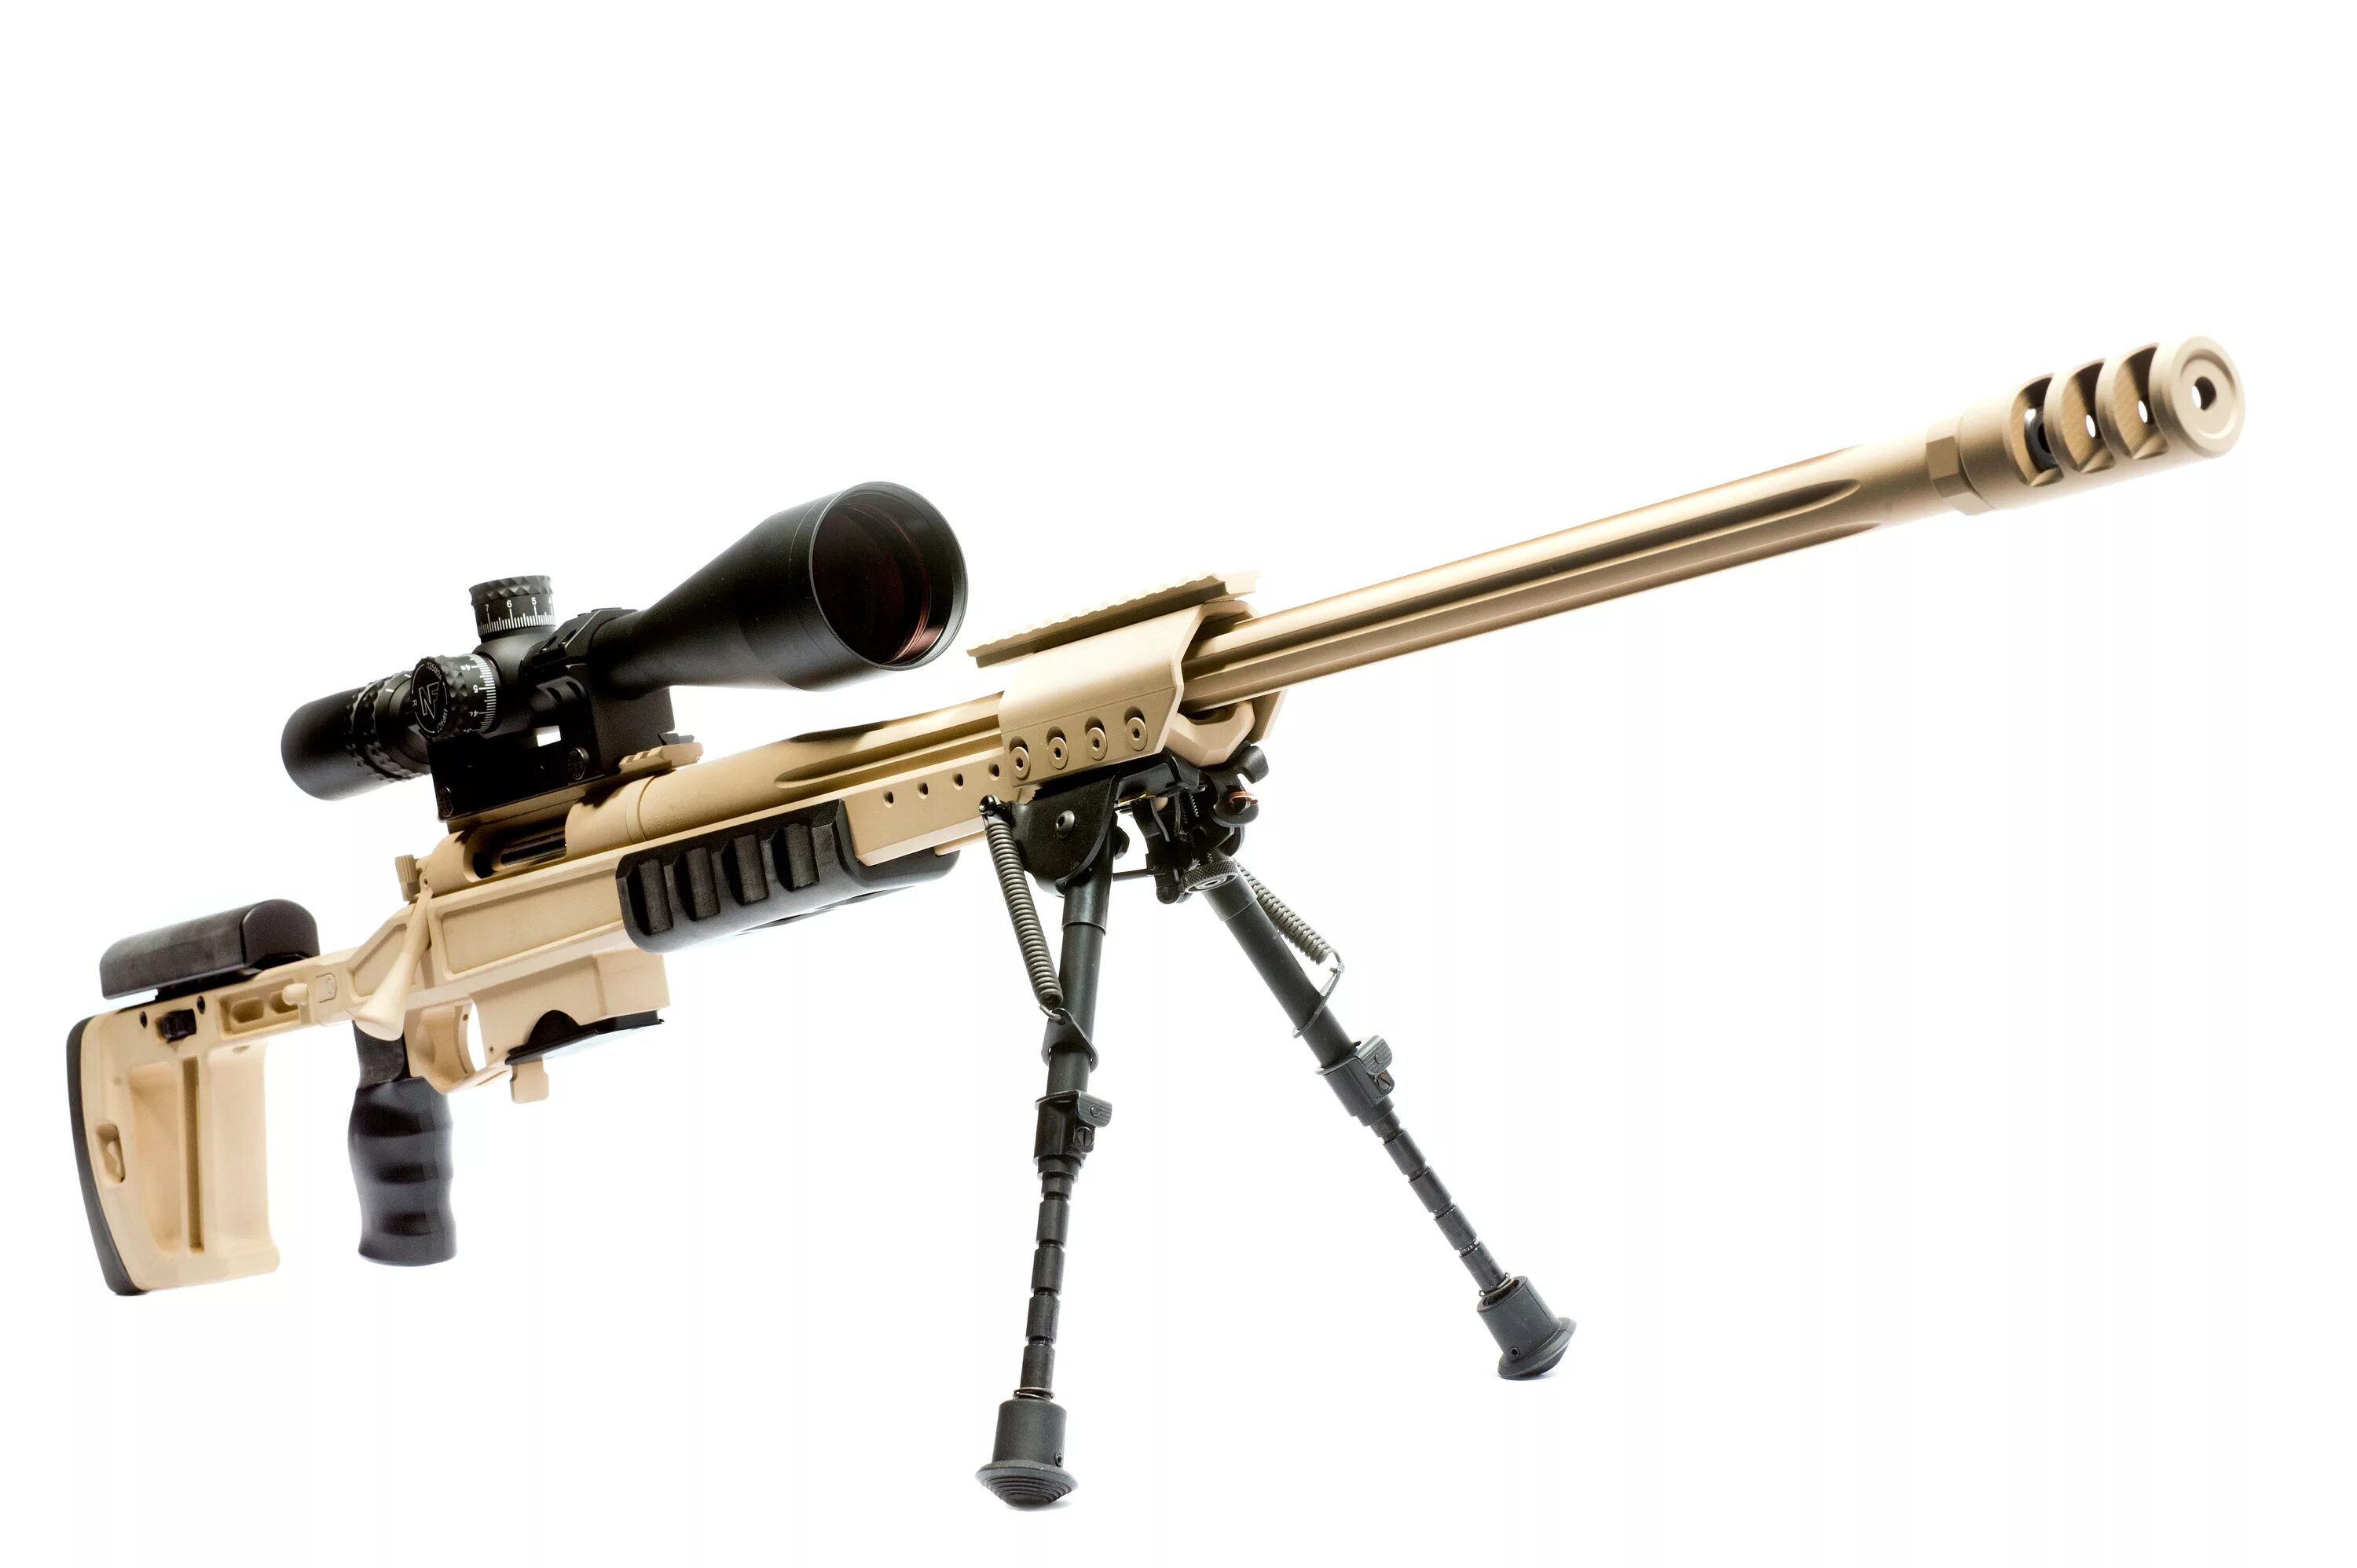 Sniper weapon. Снайперская винтовка Орсис т-5000. Орсис т-5000 338 Lapua Magnum. Орсис т5000 сапфир. СВН 98 снайперская винтовка.